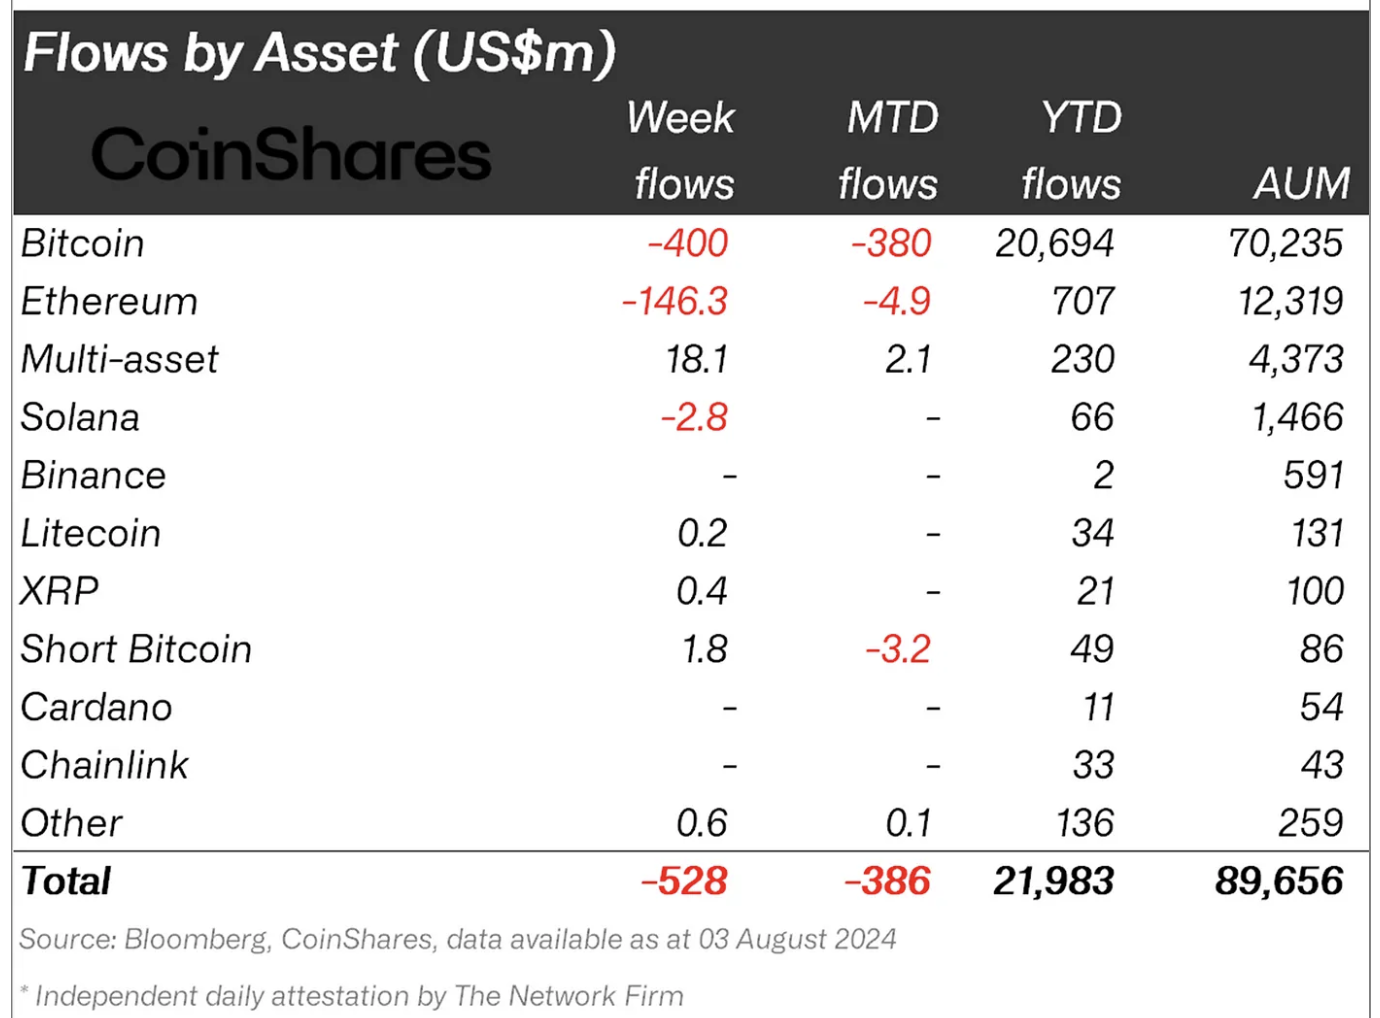 Crypto asset fund flows